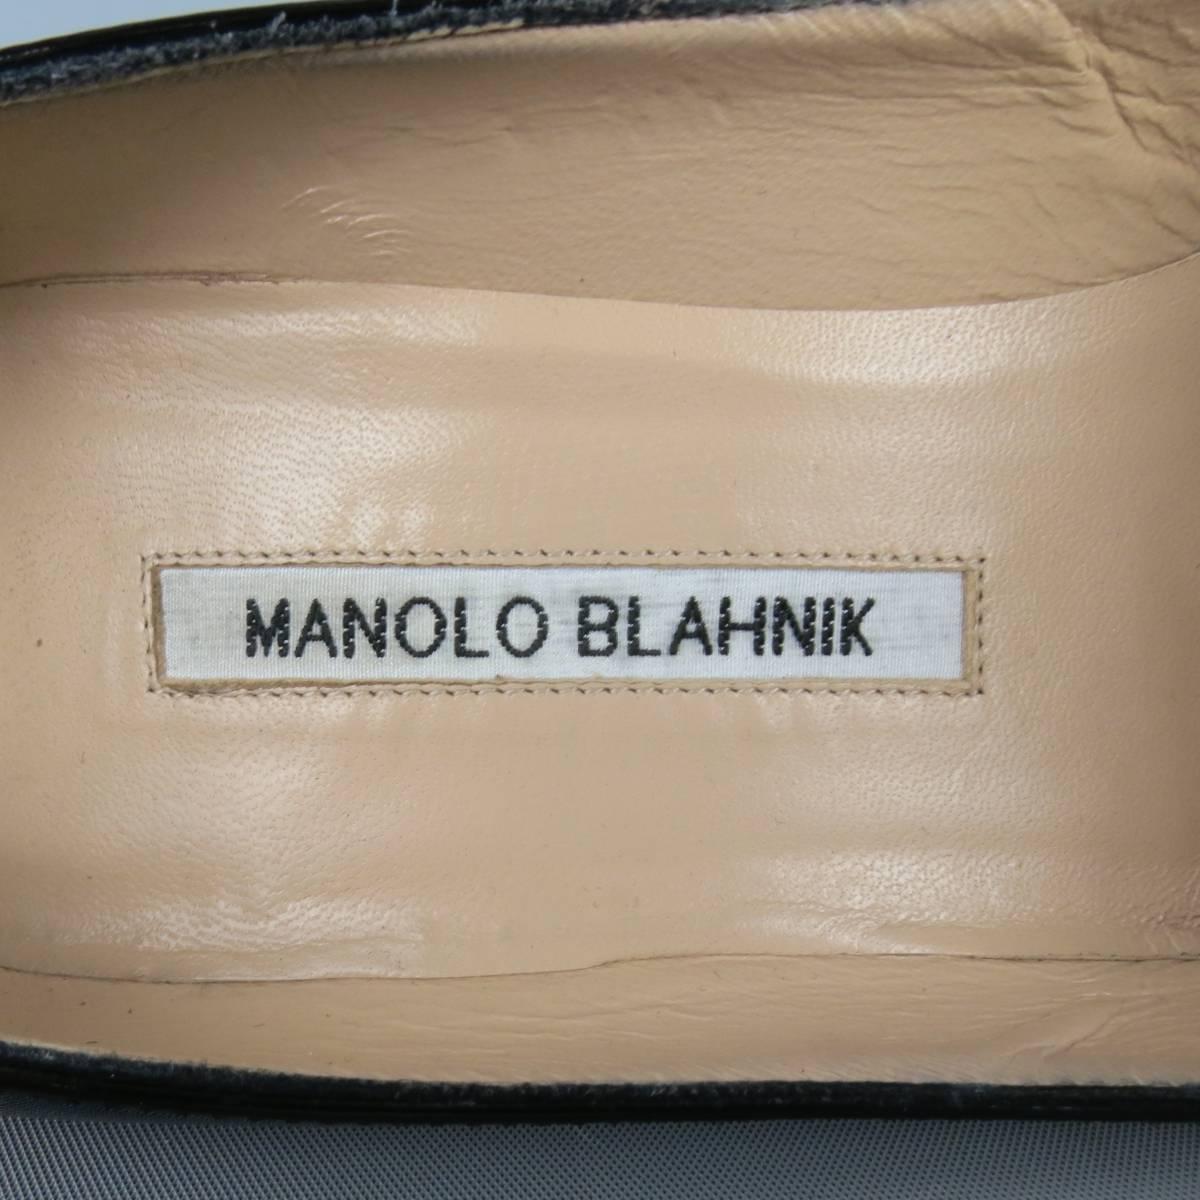 MANOLO BLAHNIK Size 7.5 Black Patent Leather Classic Pointed Toe Stiletto Pumps 1